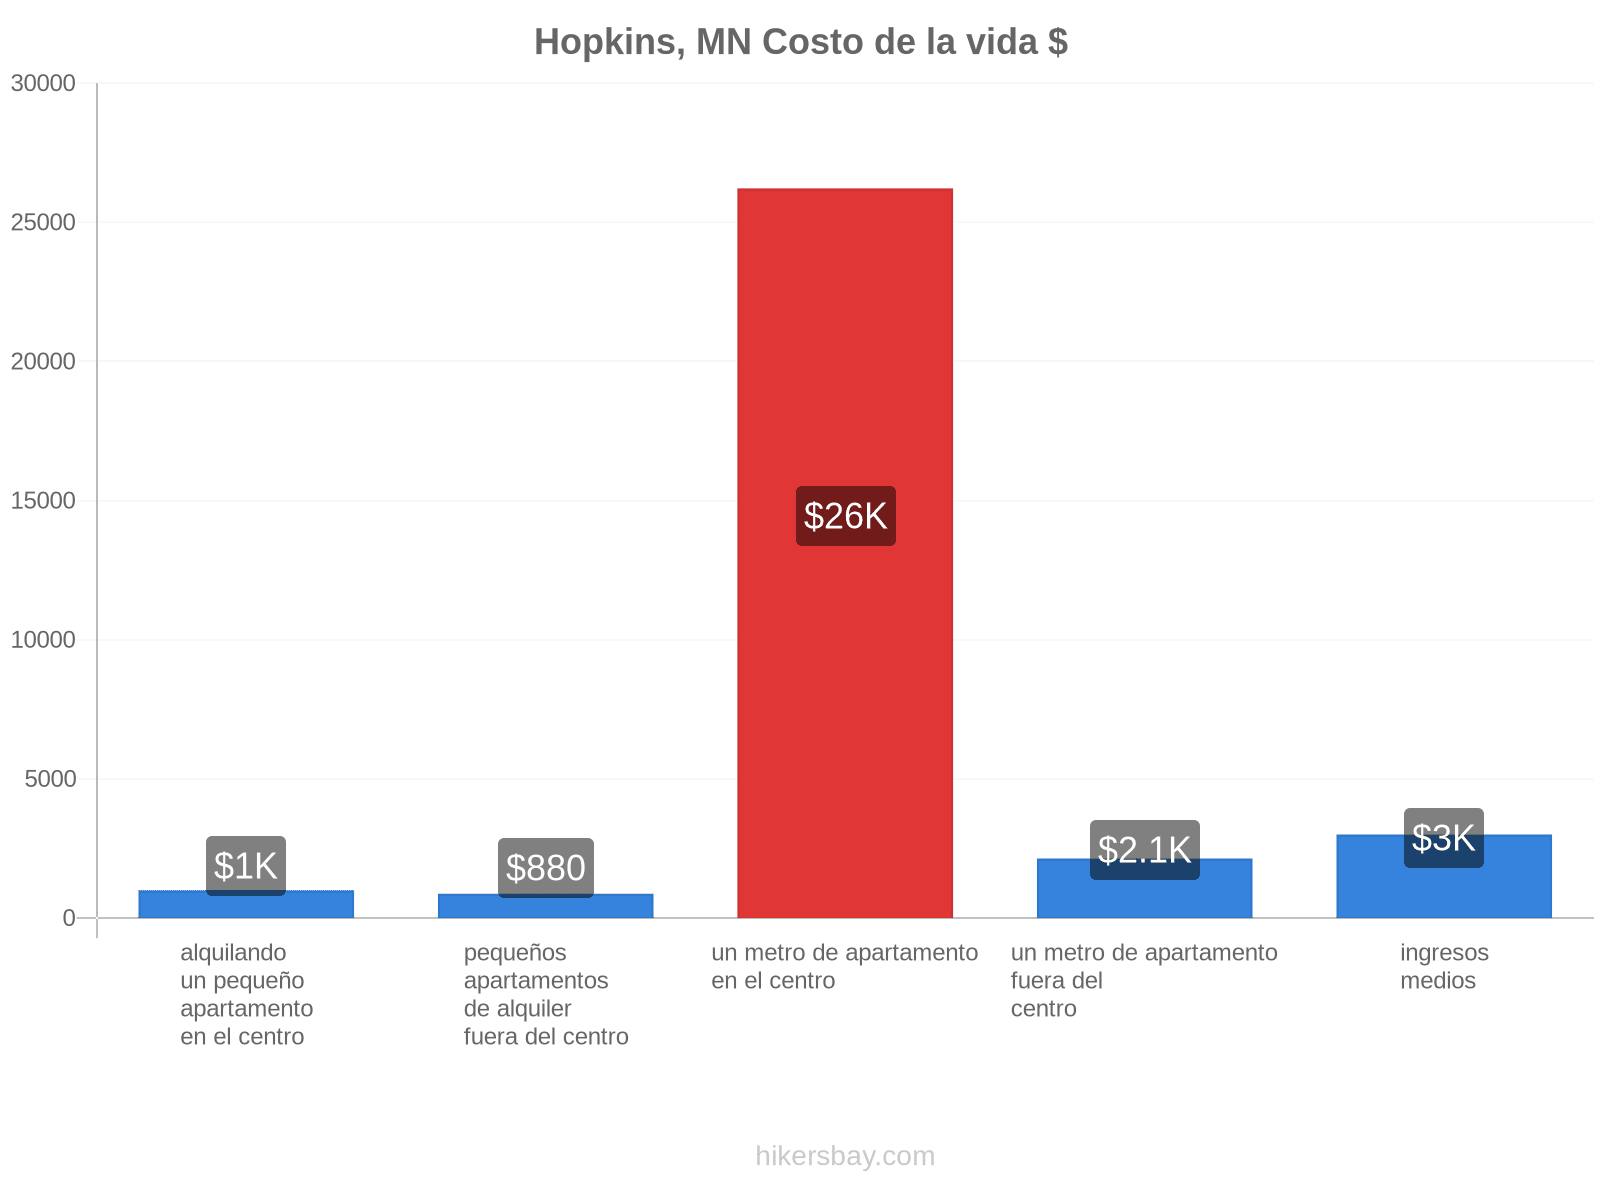 Hopkins, MN costo de la vida hikersbay.com